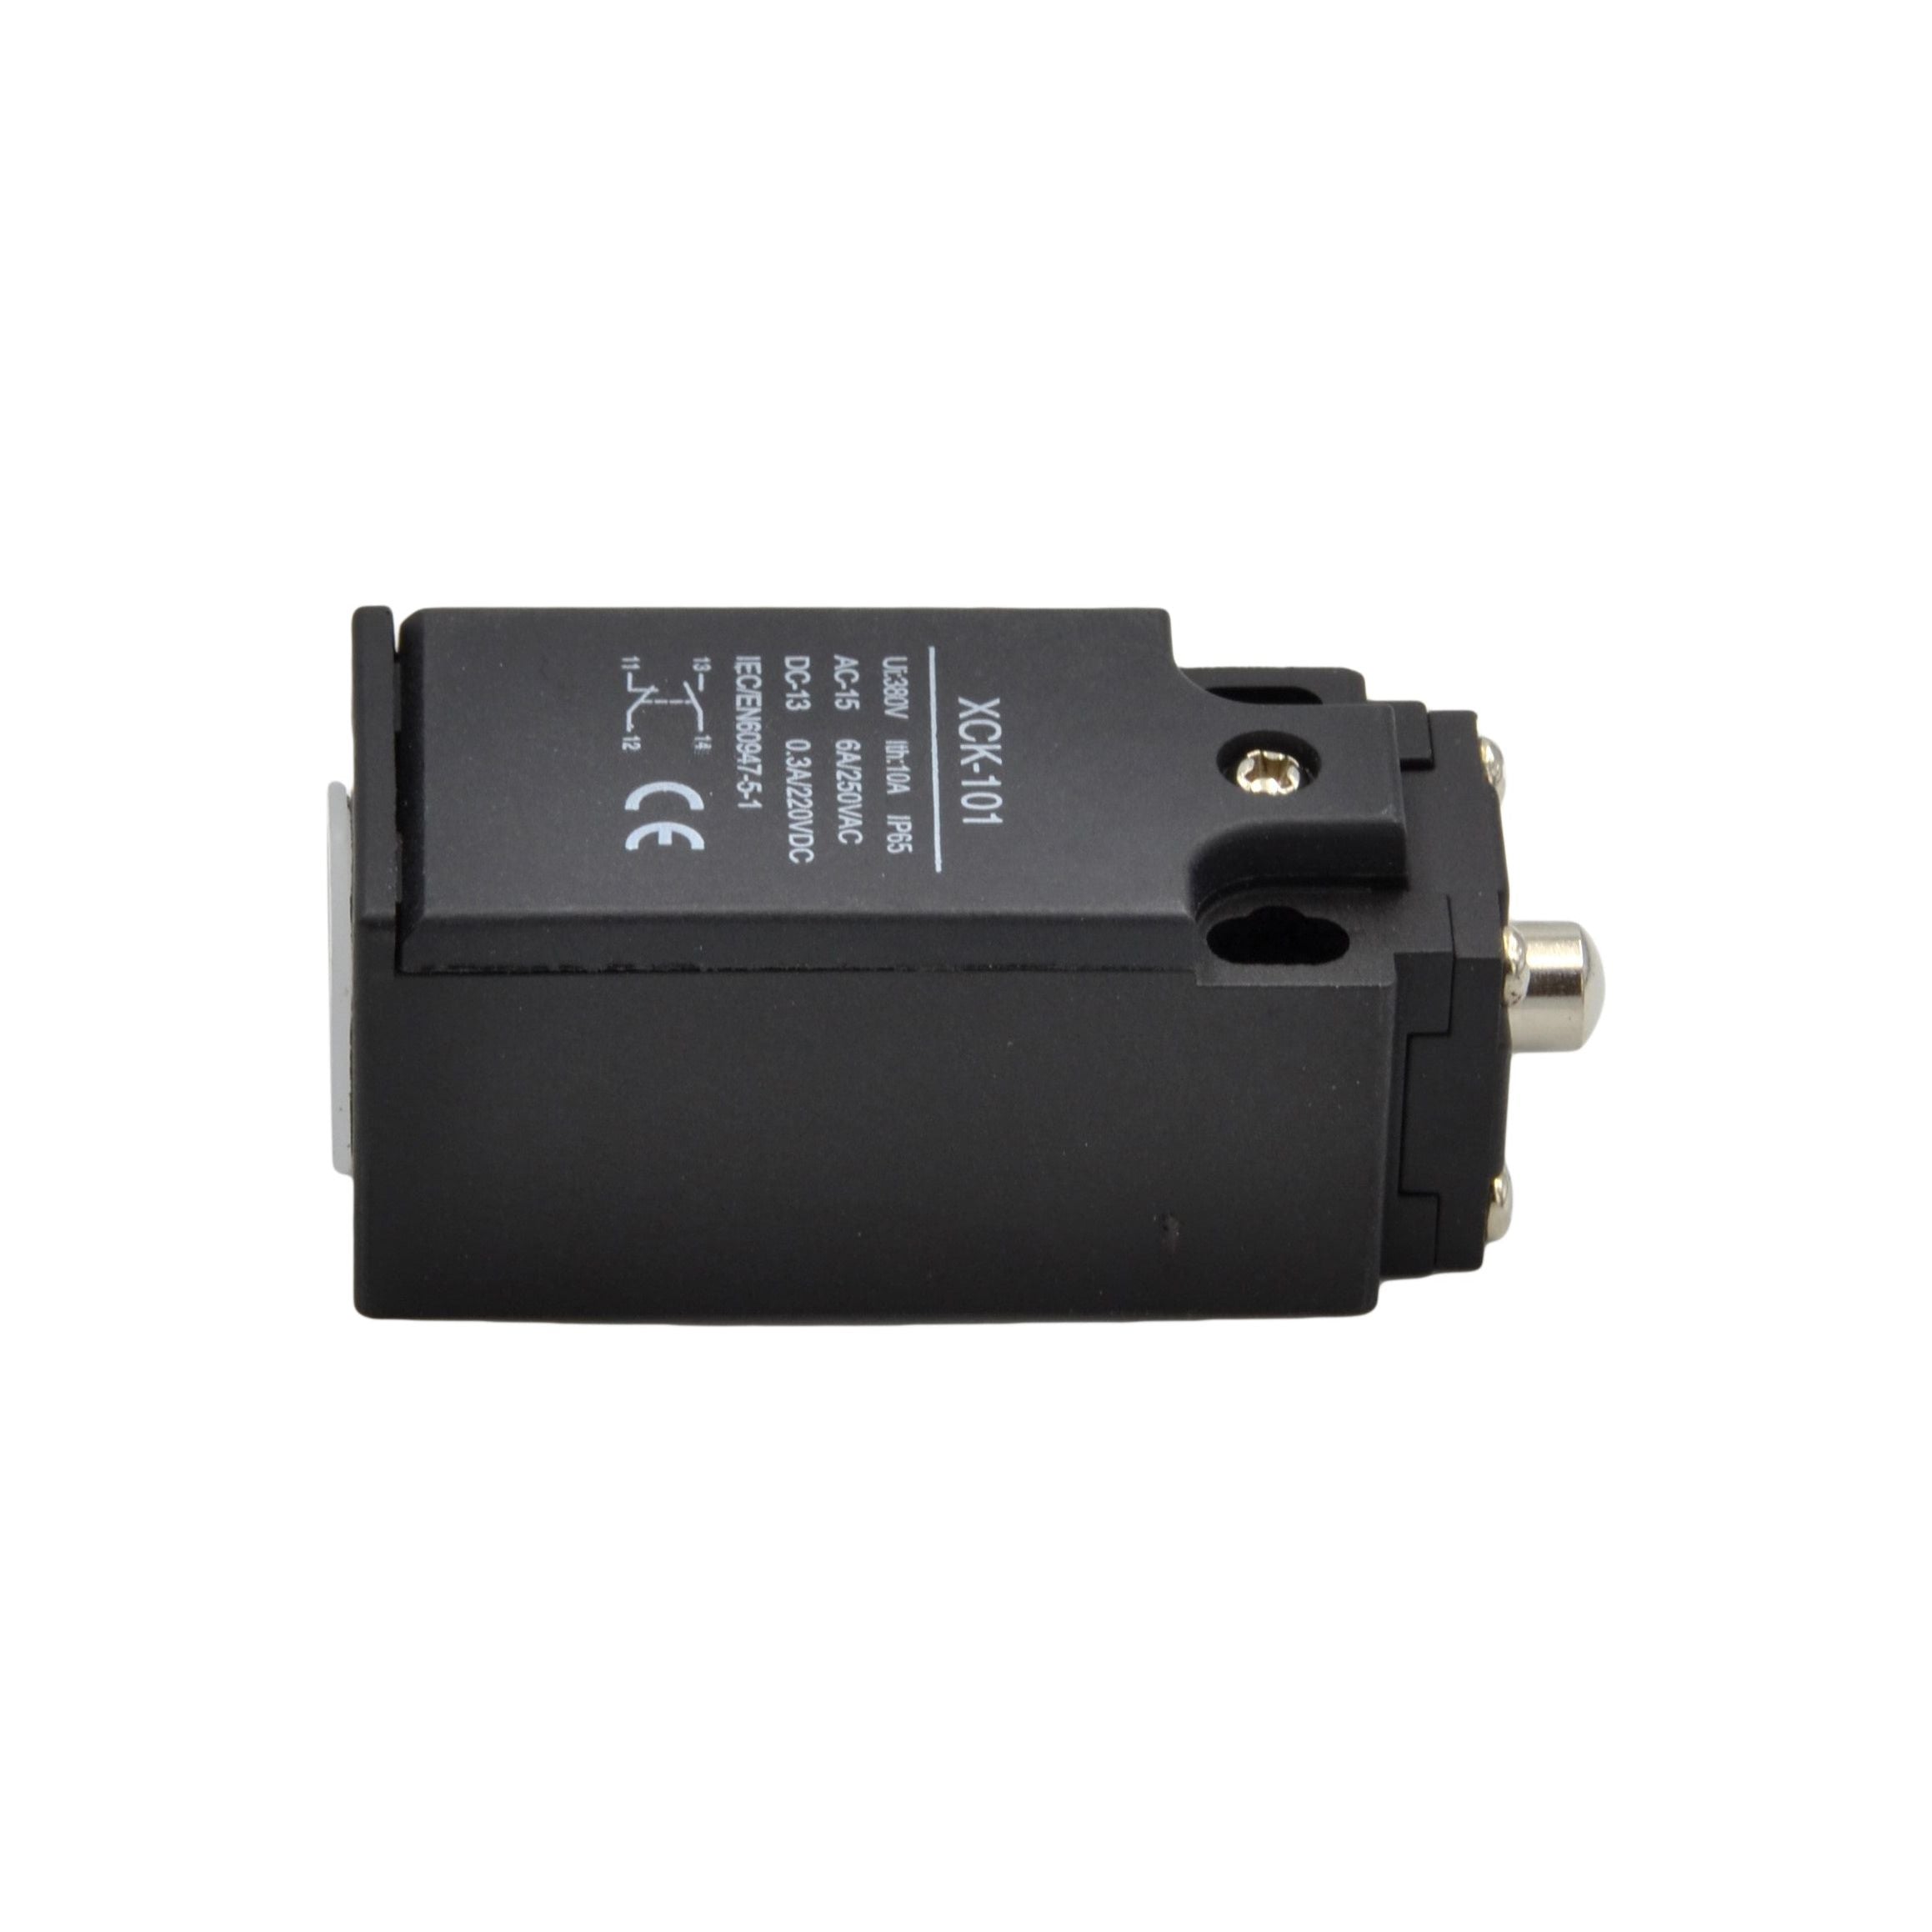 XCK-101 Micro Plunger Limit Switch